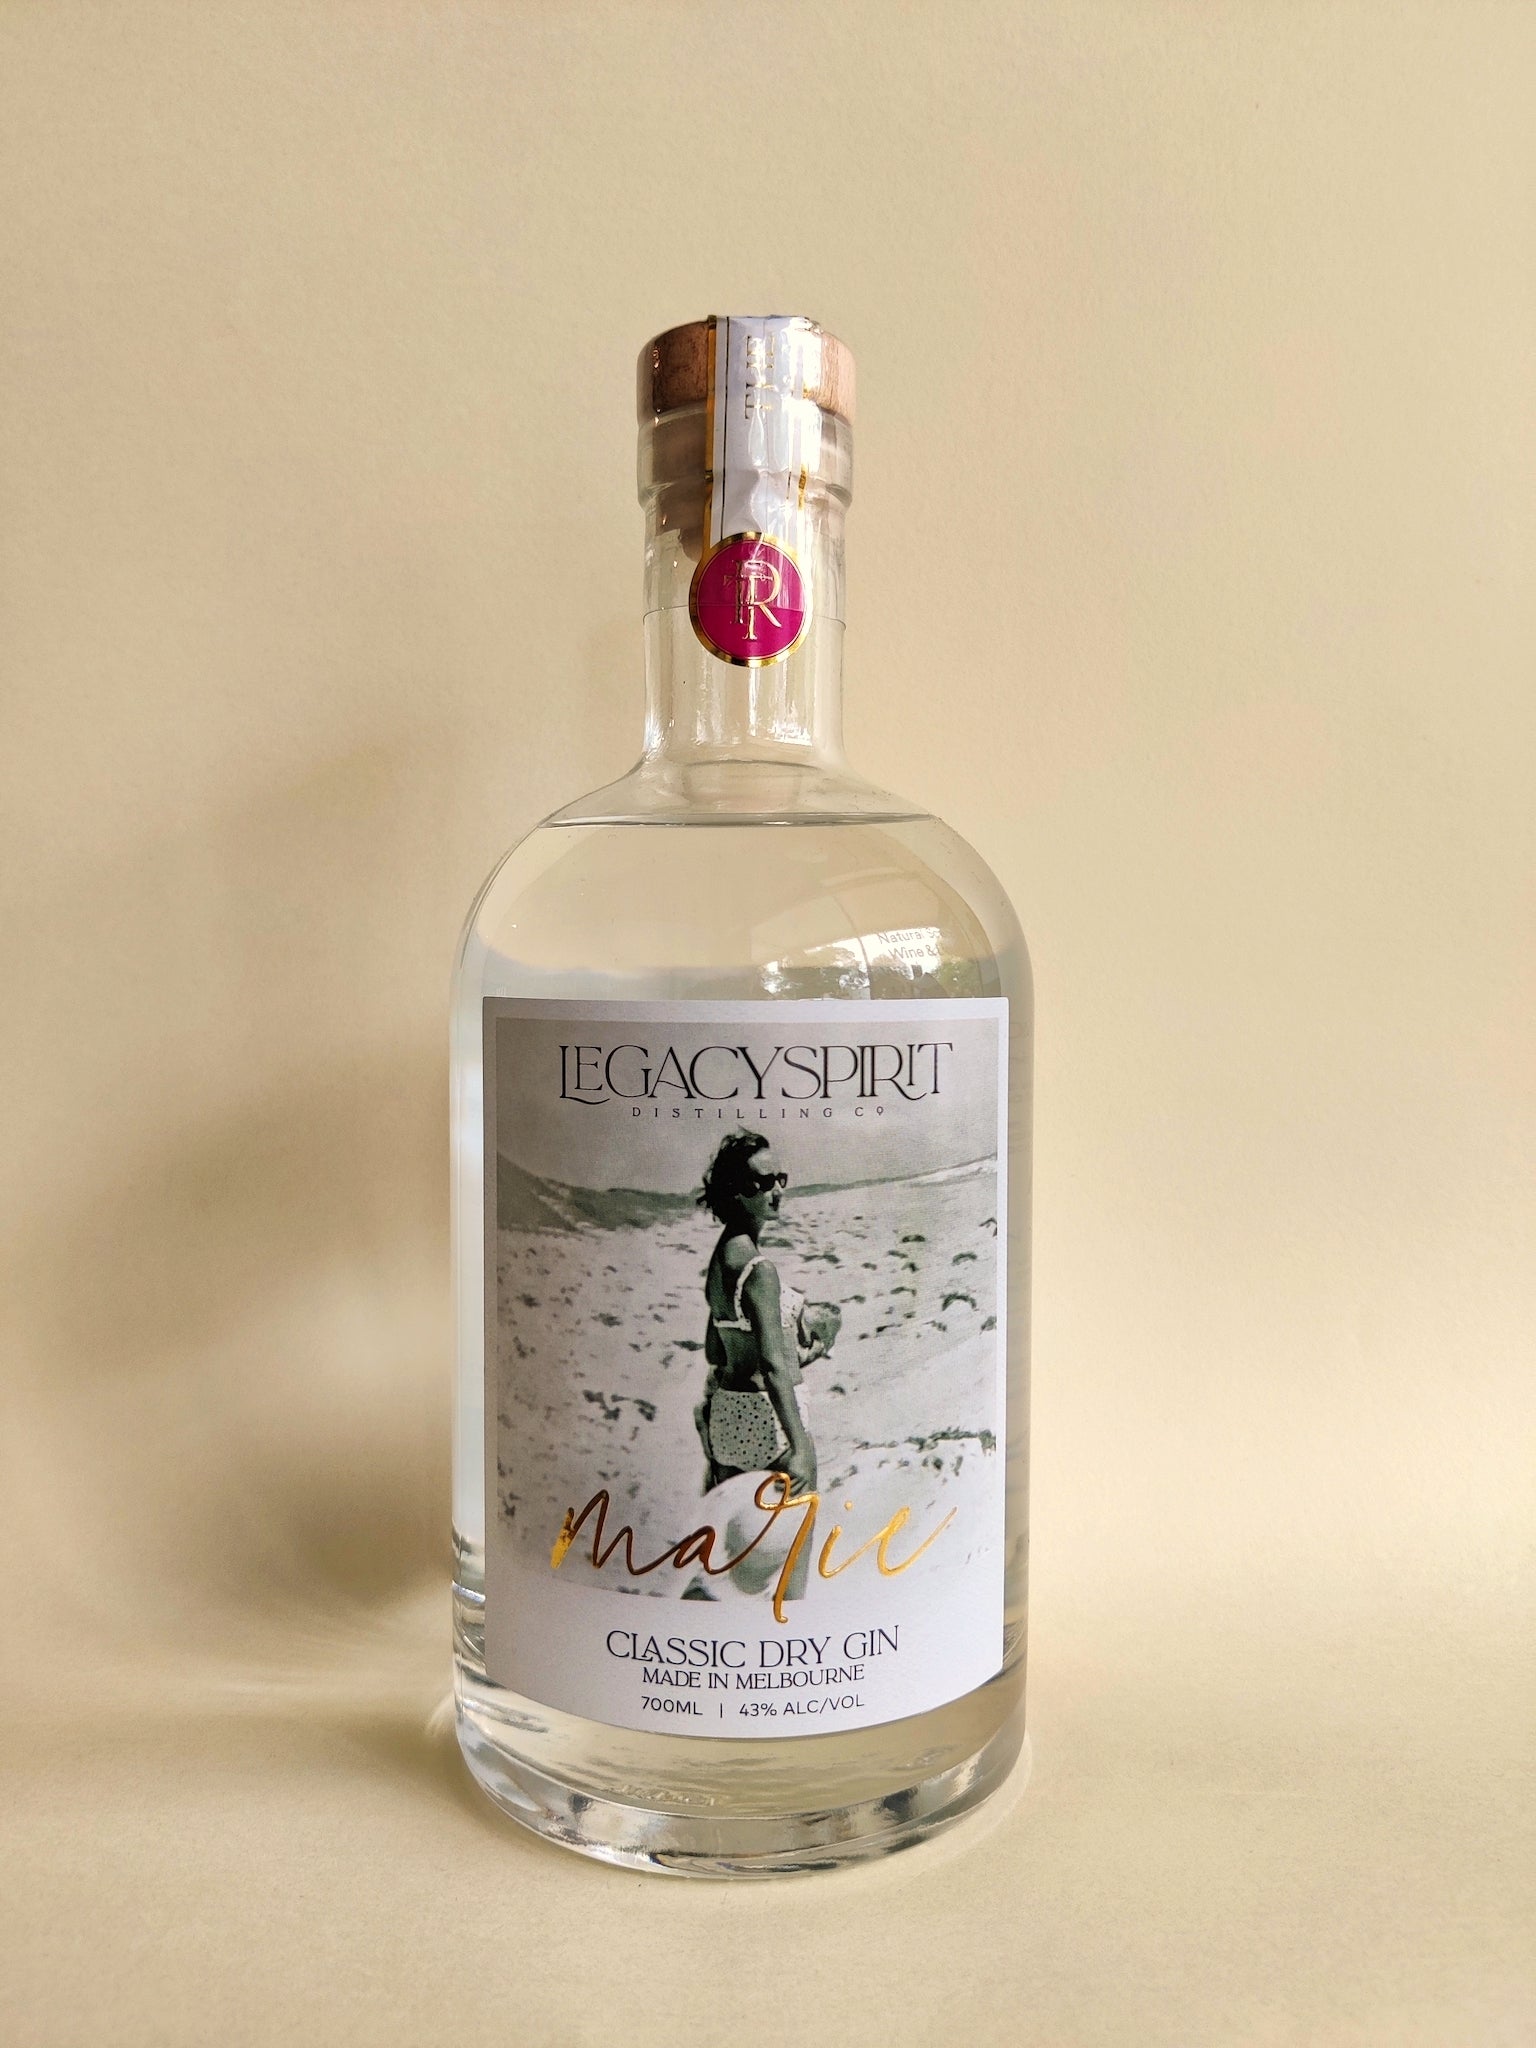 A bottle of Legacy Spirit Distilling Marie Gin.